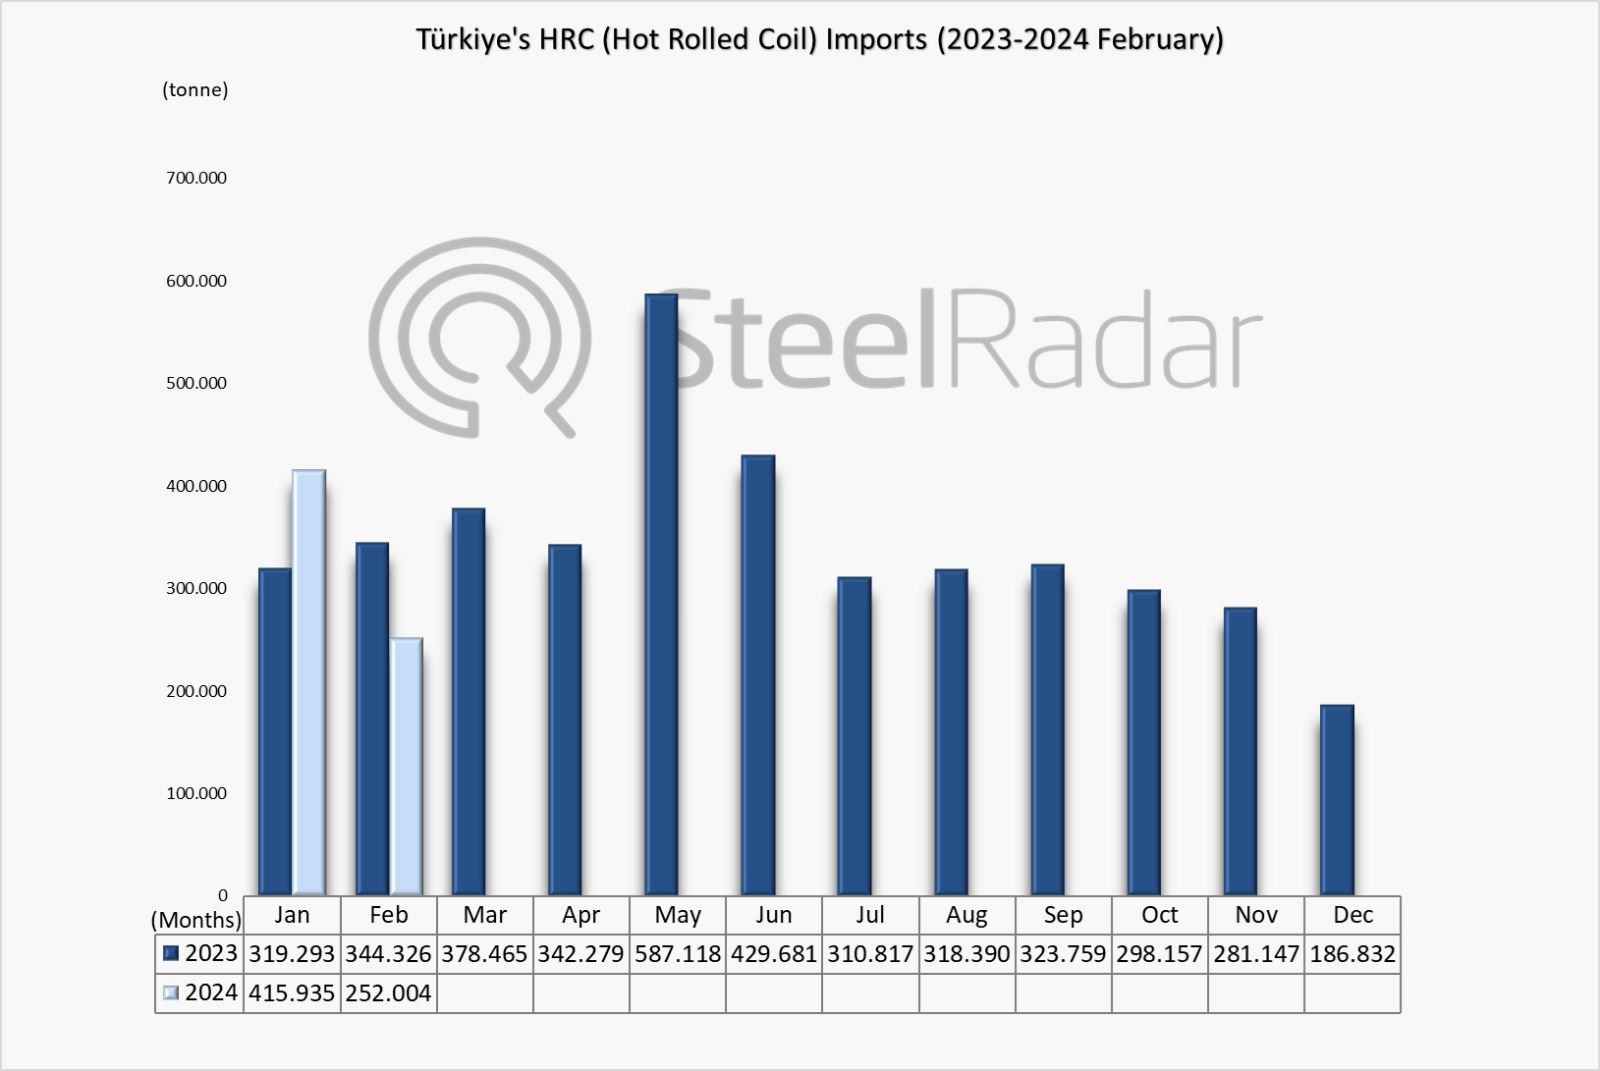 HRC imports of Türkiye decreased by 26.8% in February